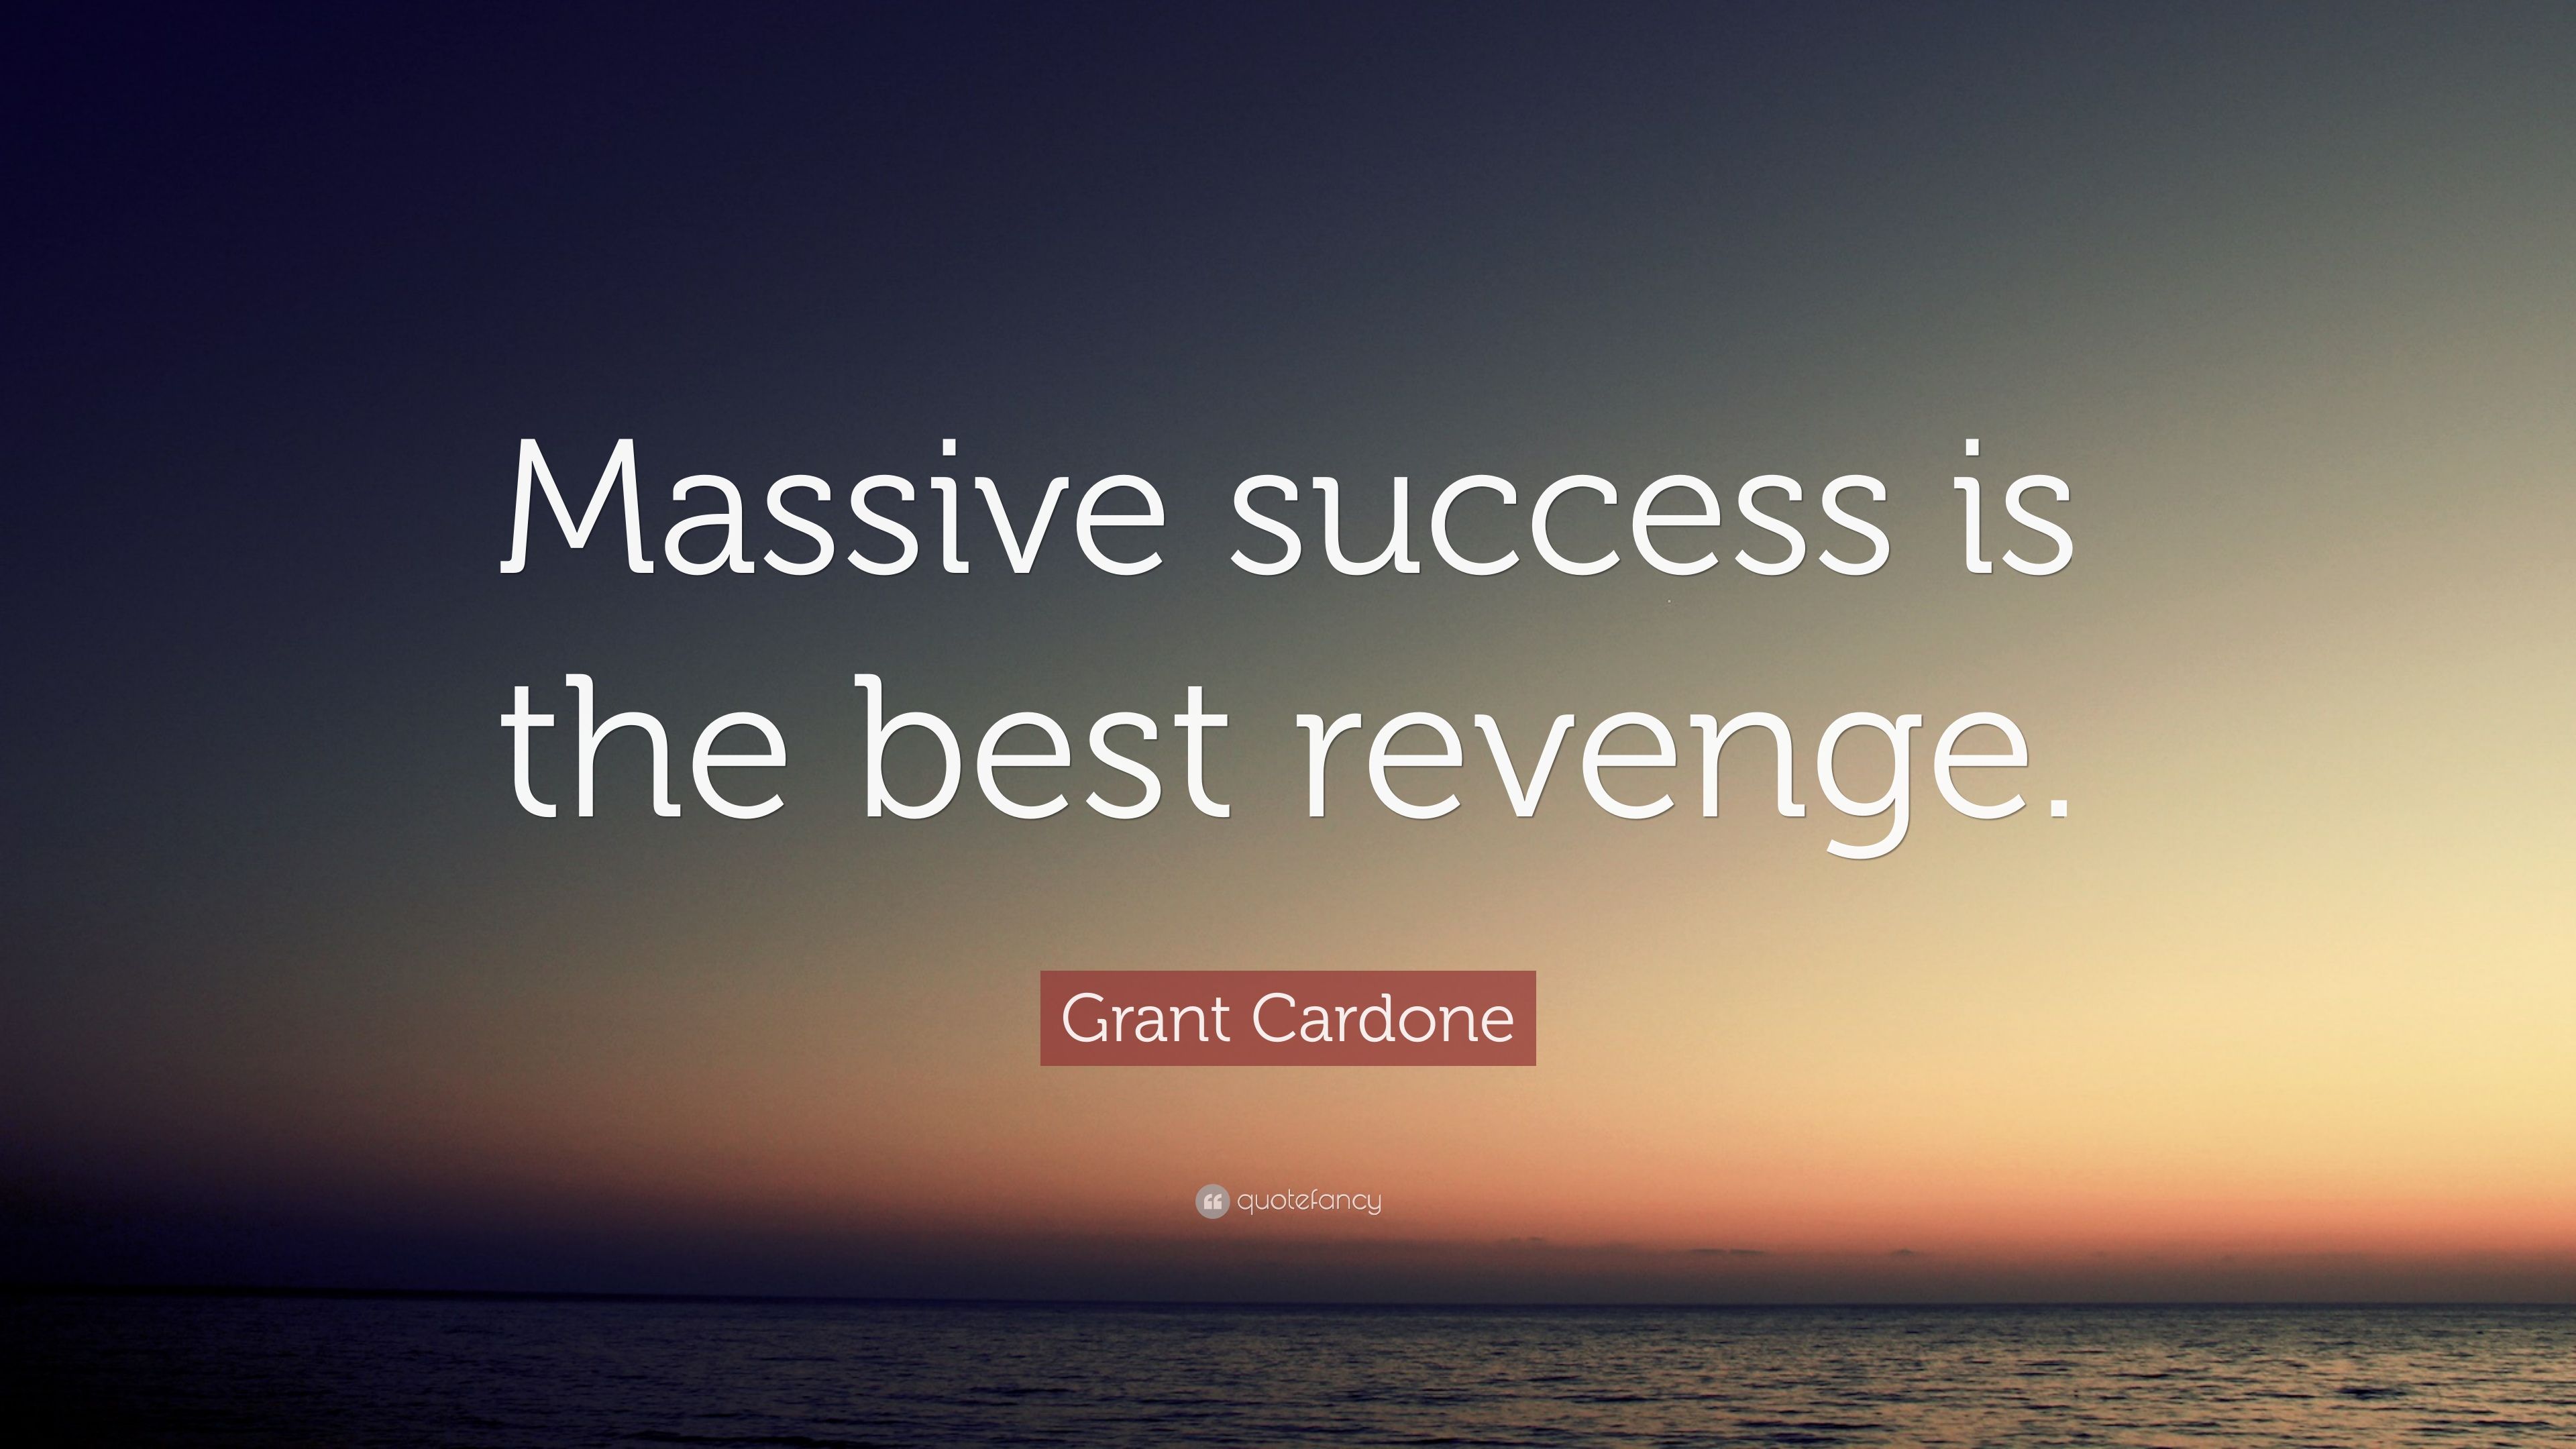 Grant Cardone Quote: “Massive success is the best revenge.” 12